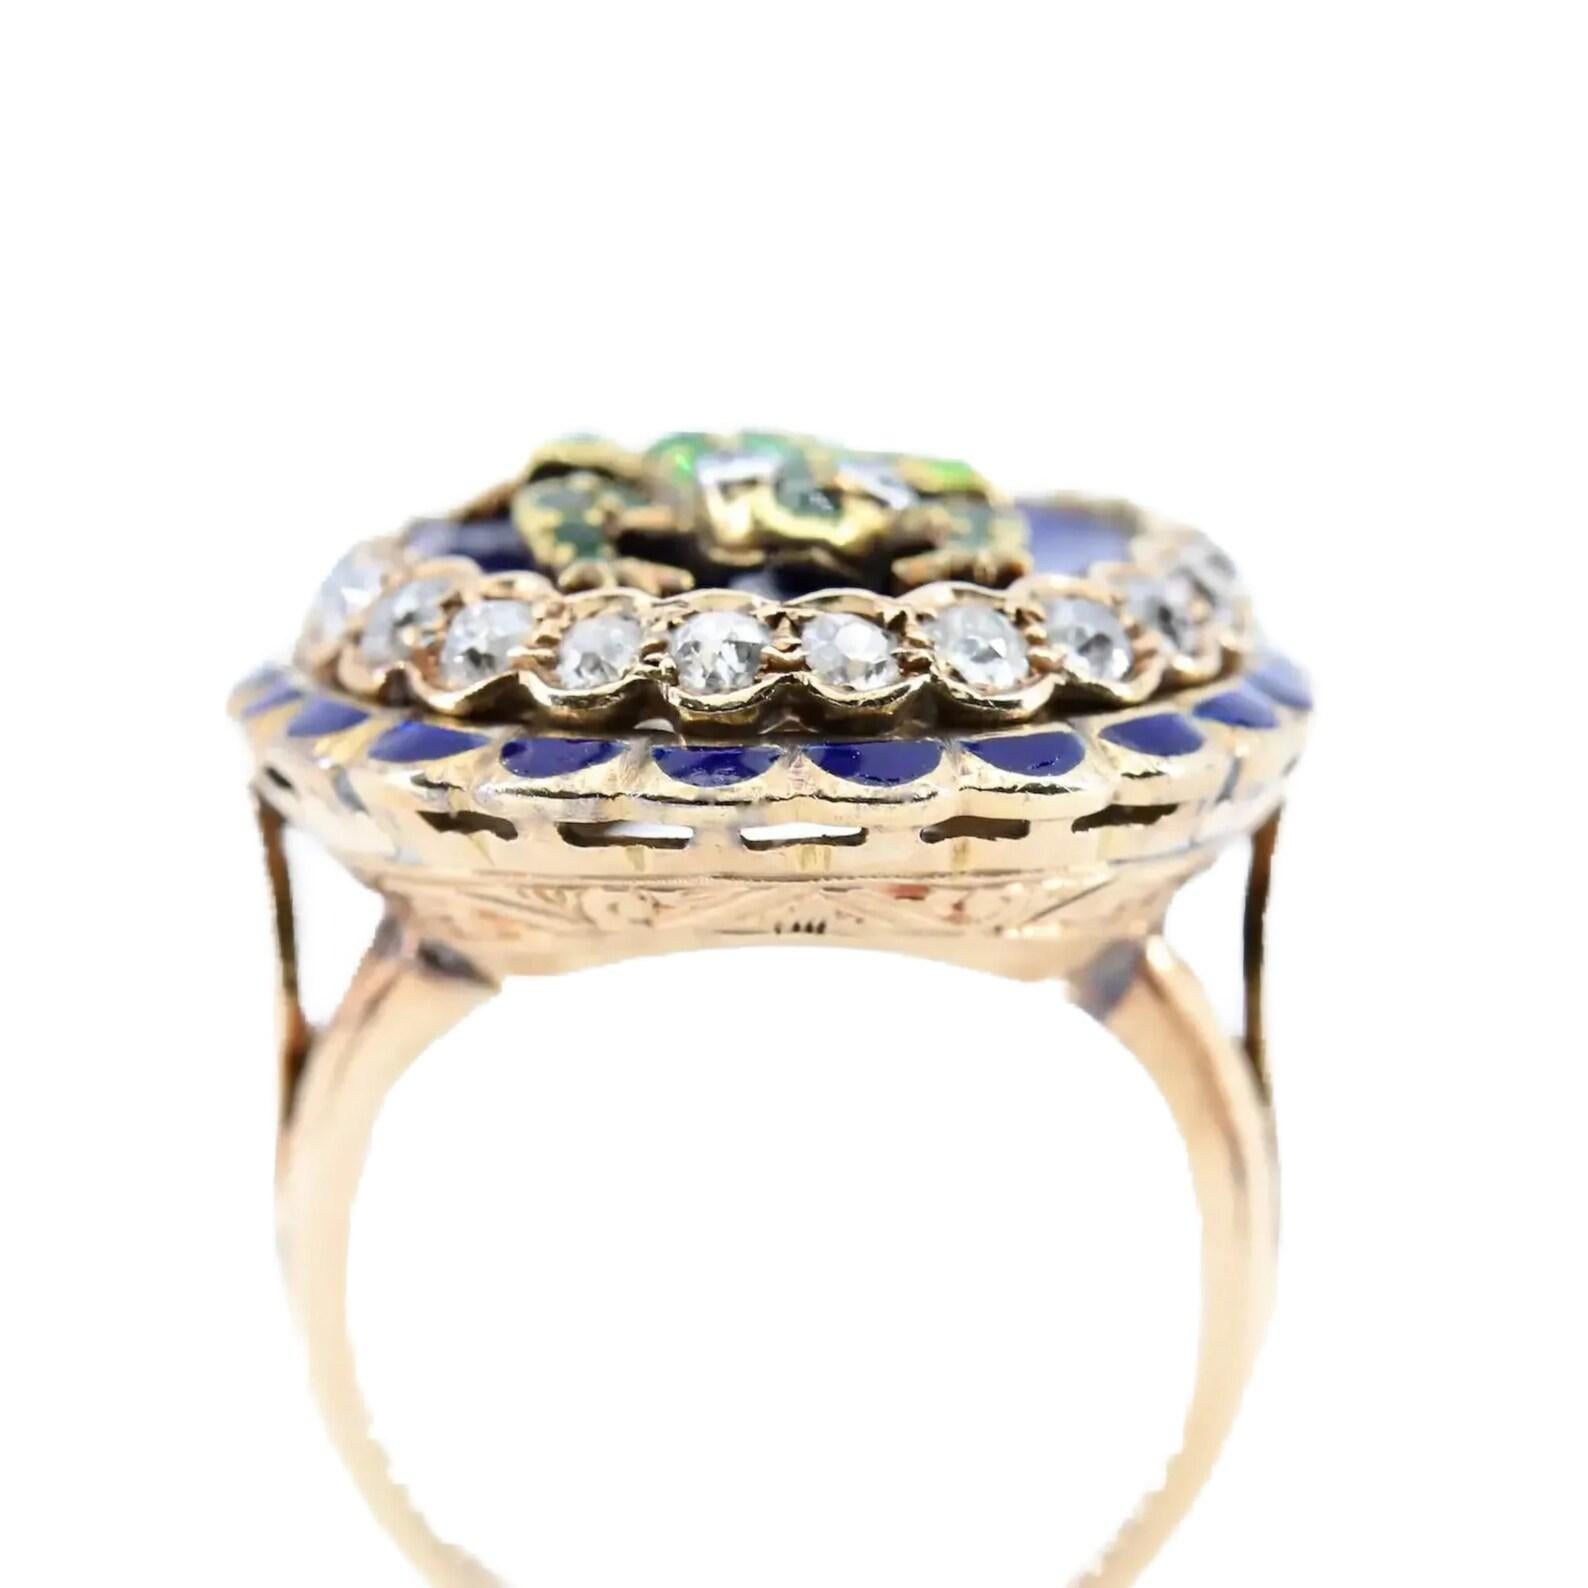 Victorian Frog Motif Demantoid Garnet, Diamond, & Blue Enamel Ring In Good Condition For Sale In Boston, MA